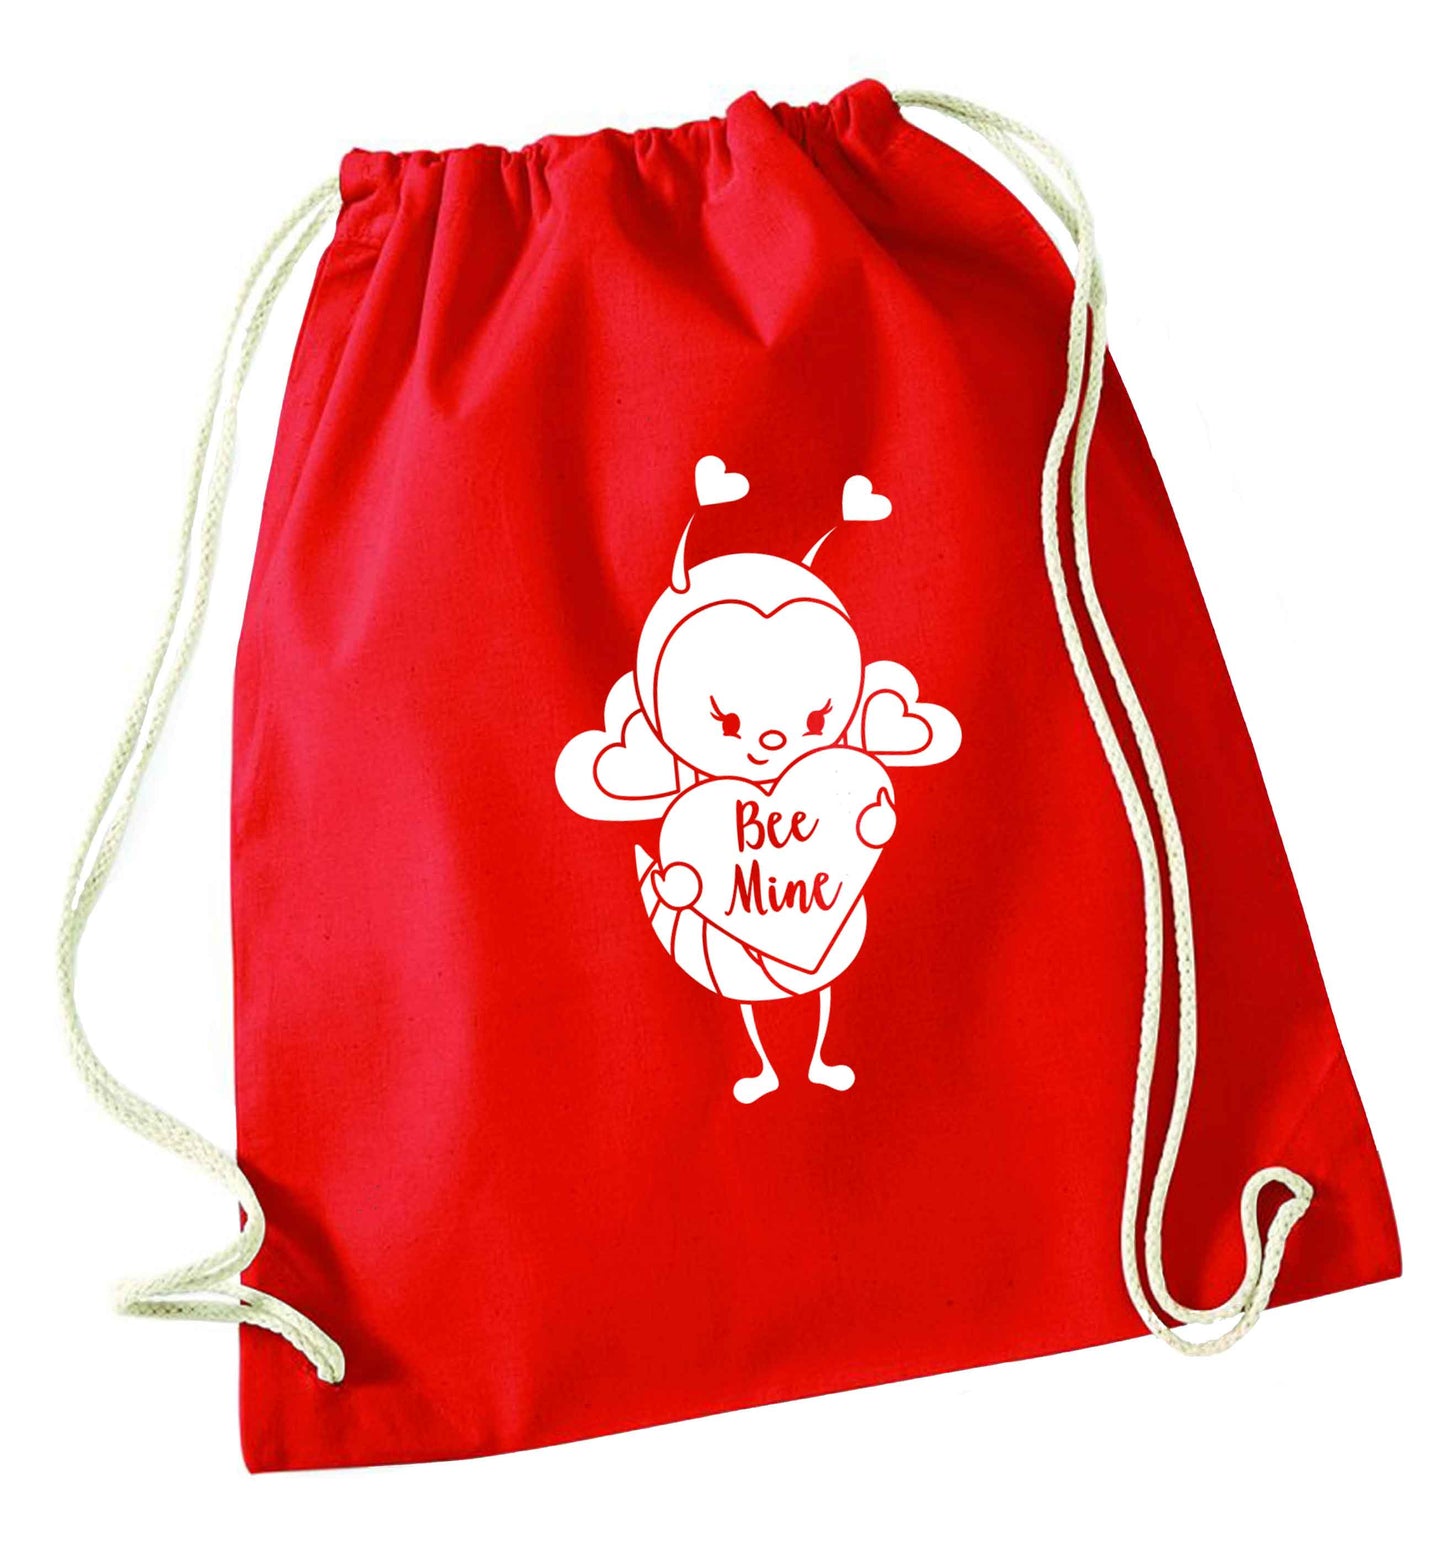 Bee mine red drawstring bag 